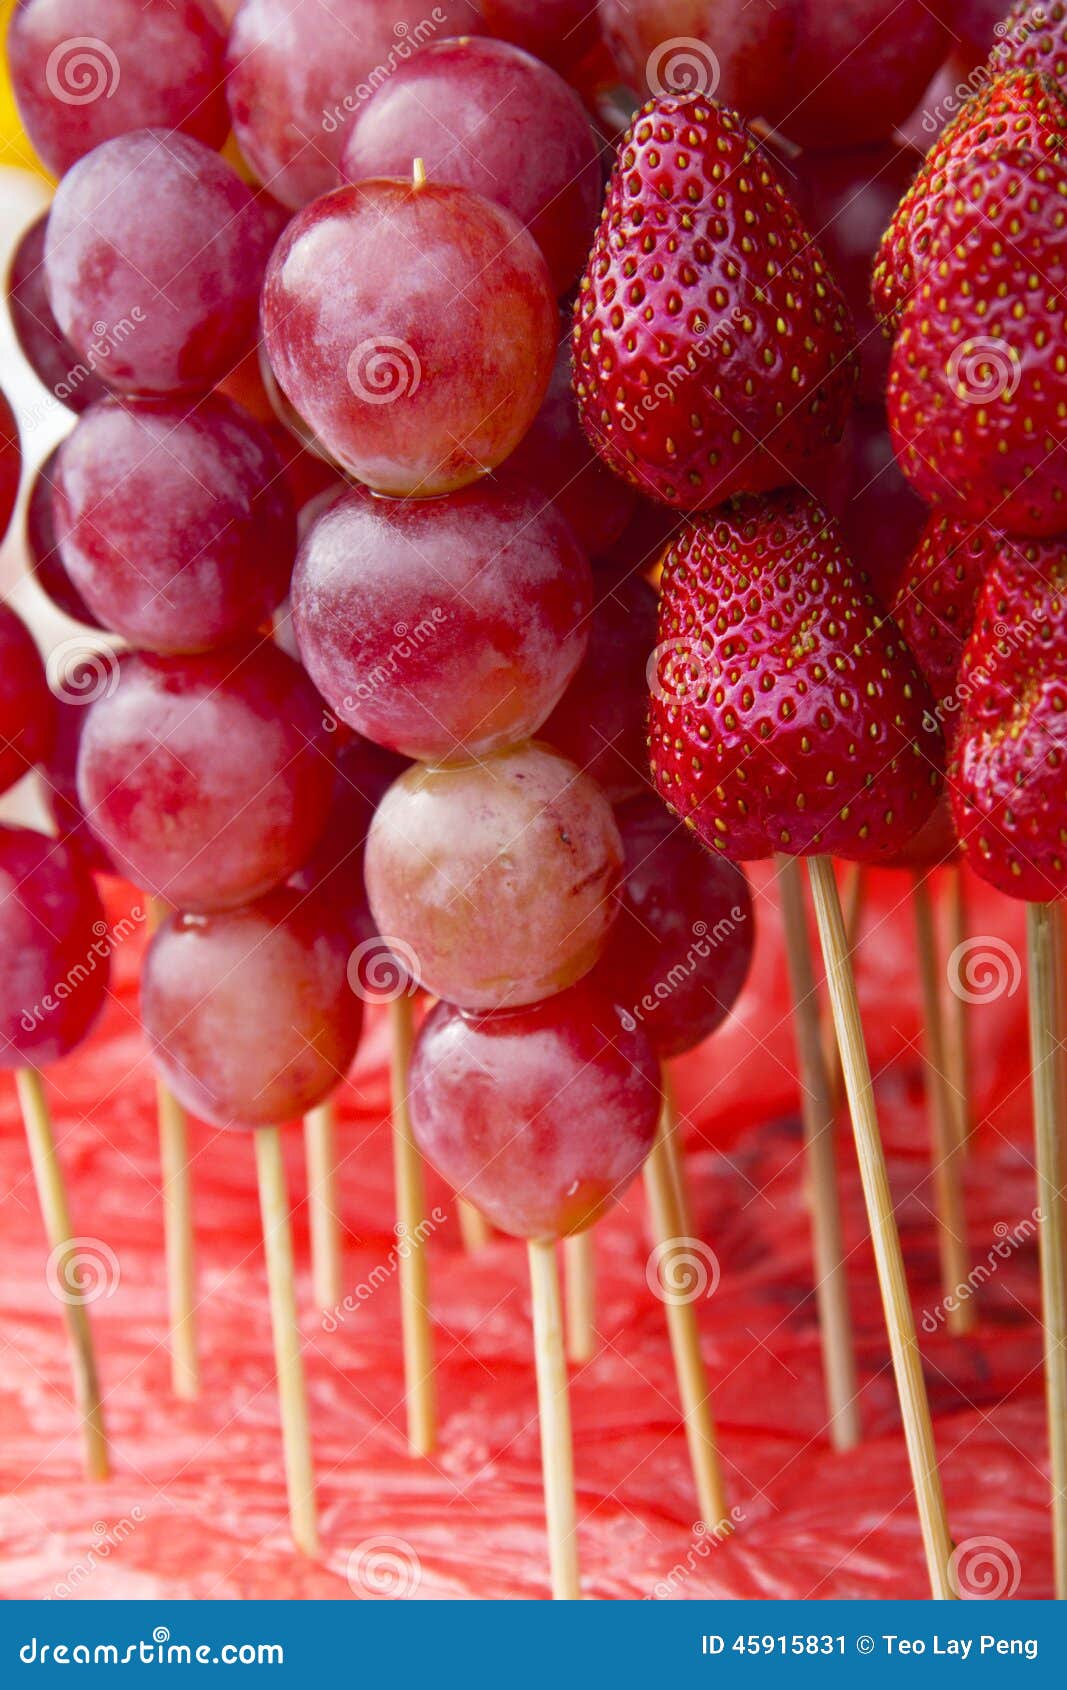 fruits string